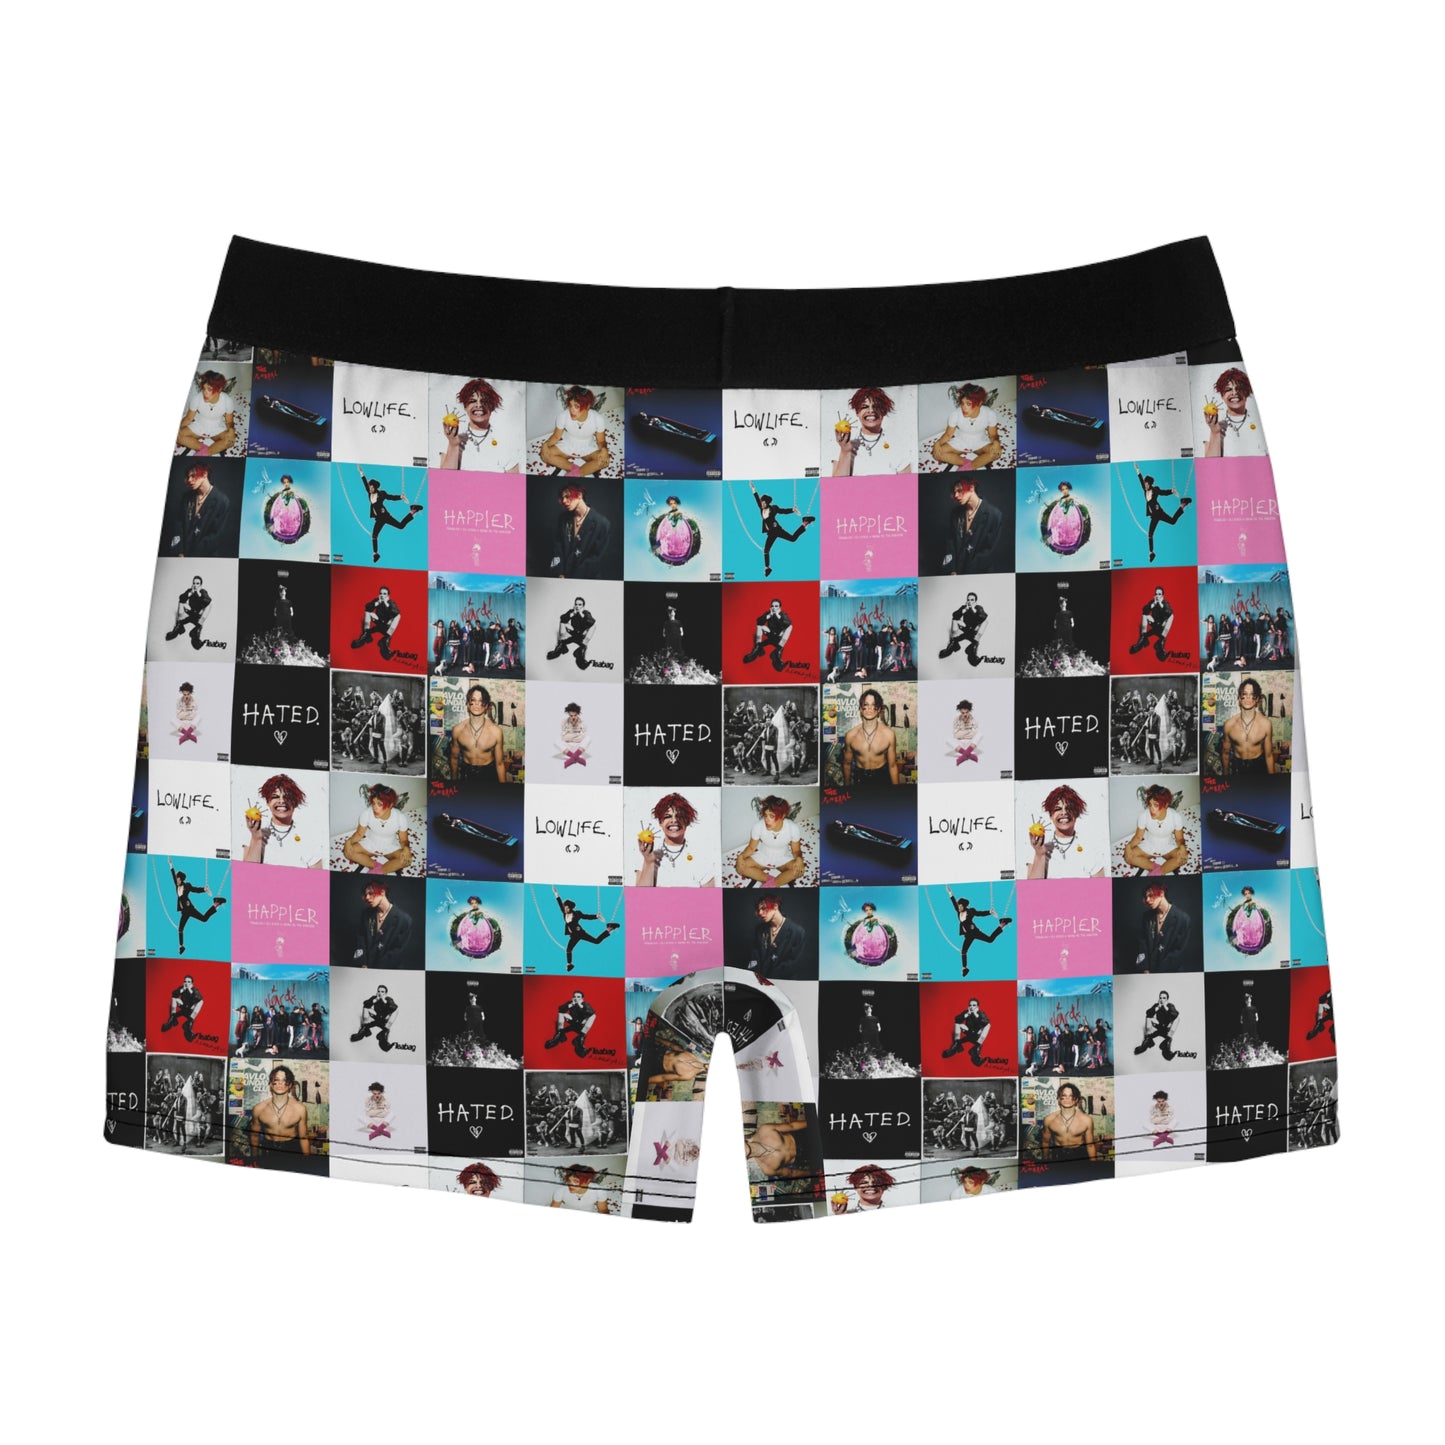 YUNGBLUD Album Cover Art Collage Men's Boxer Briefs Underwear